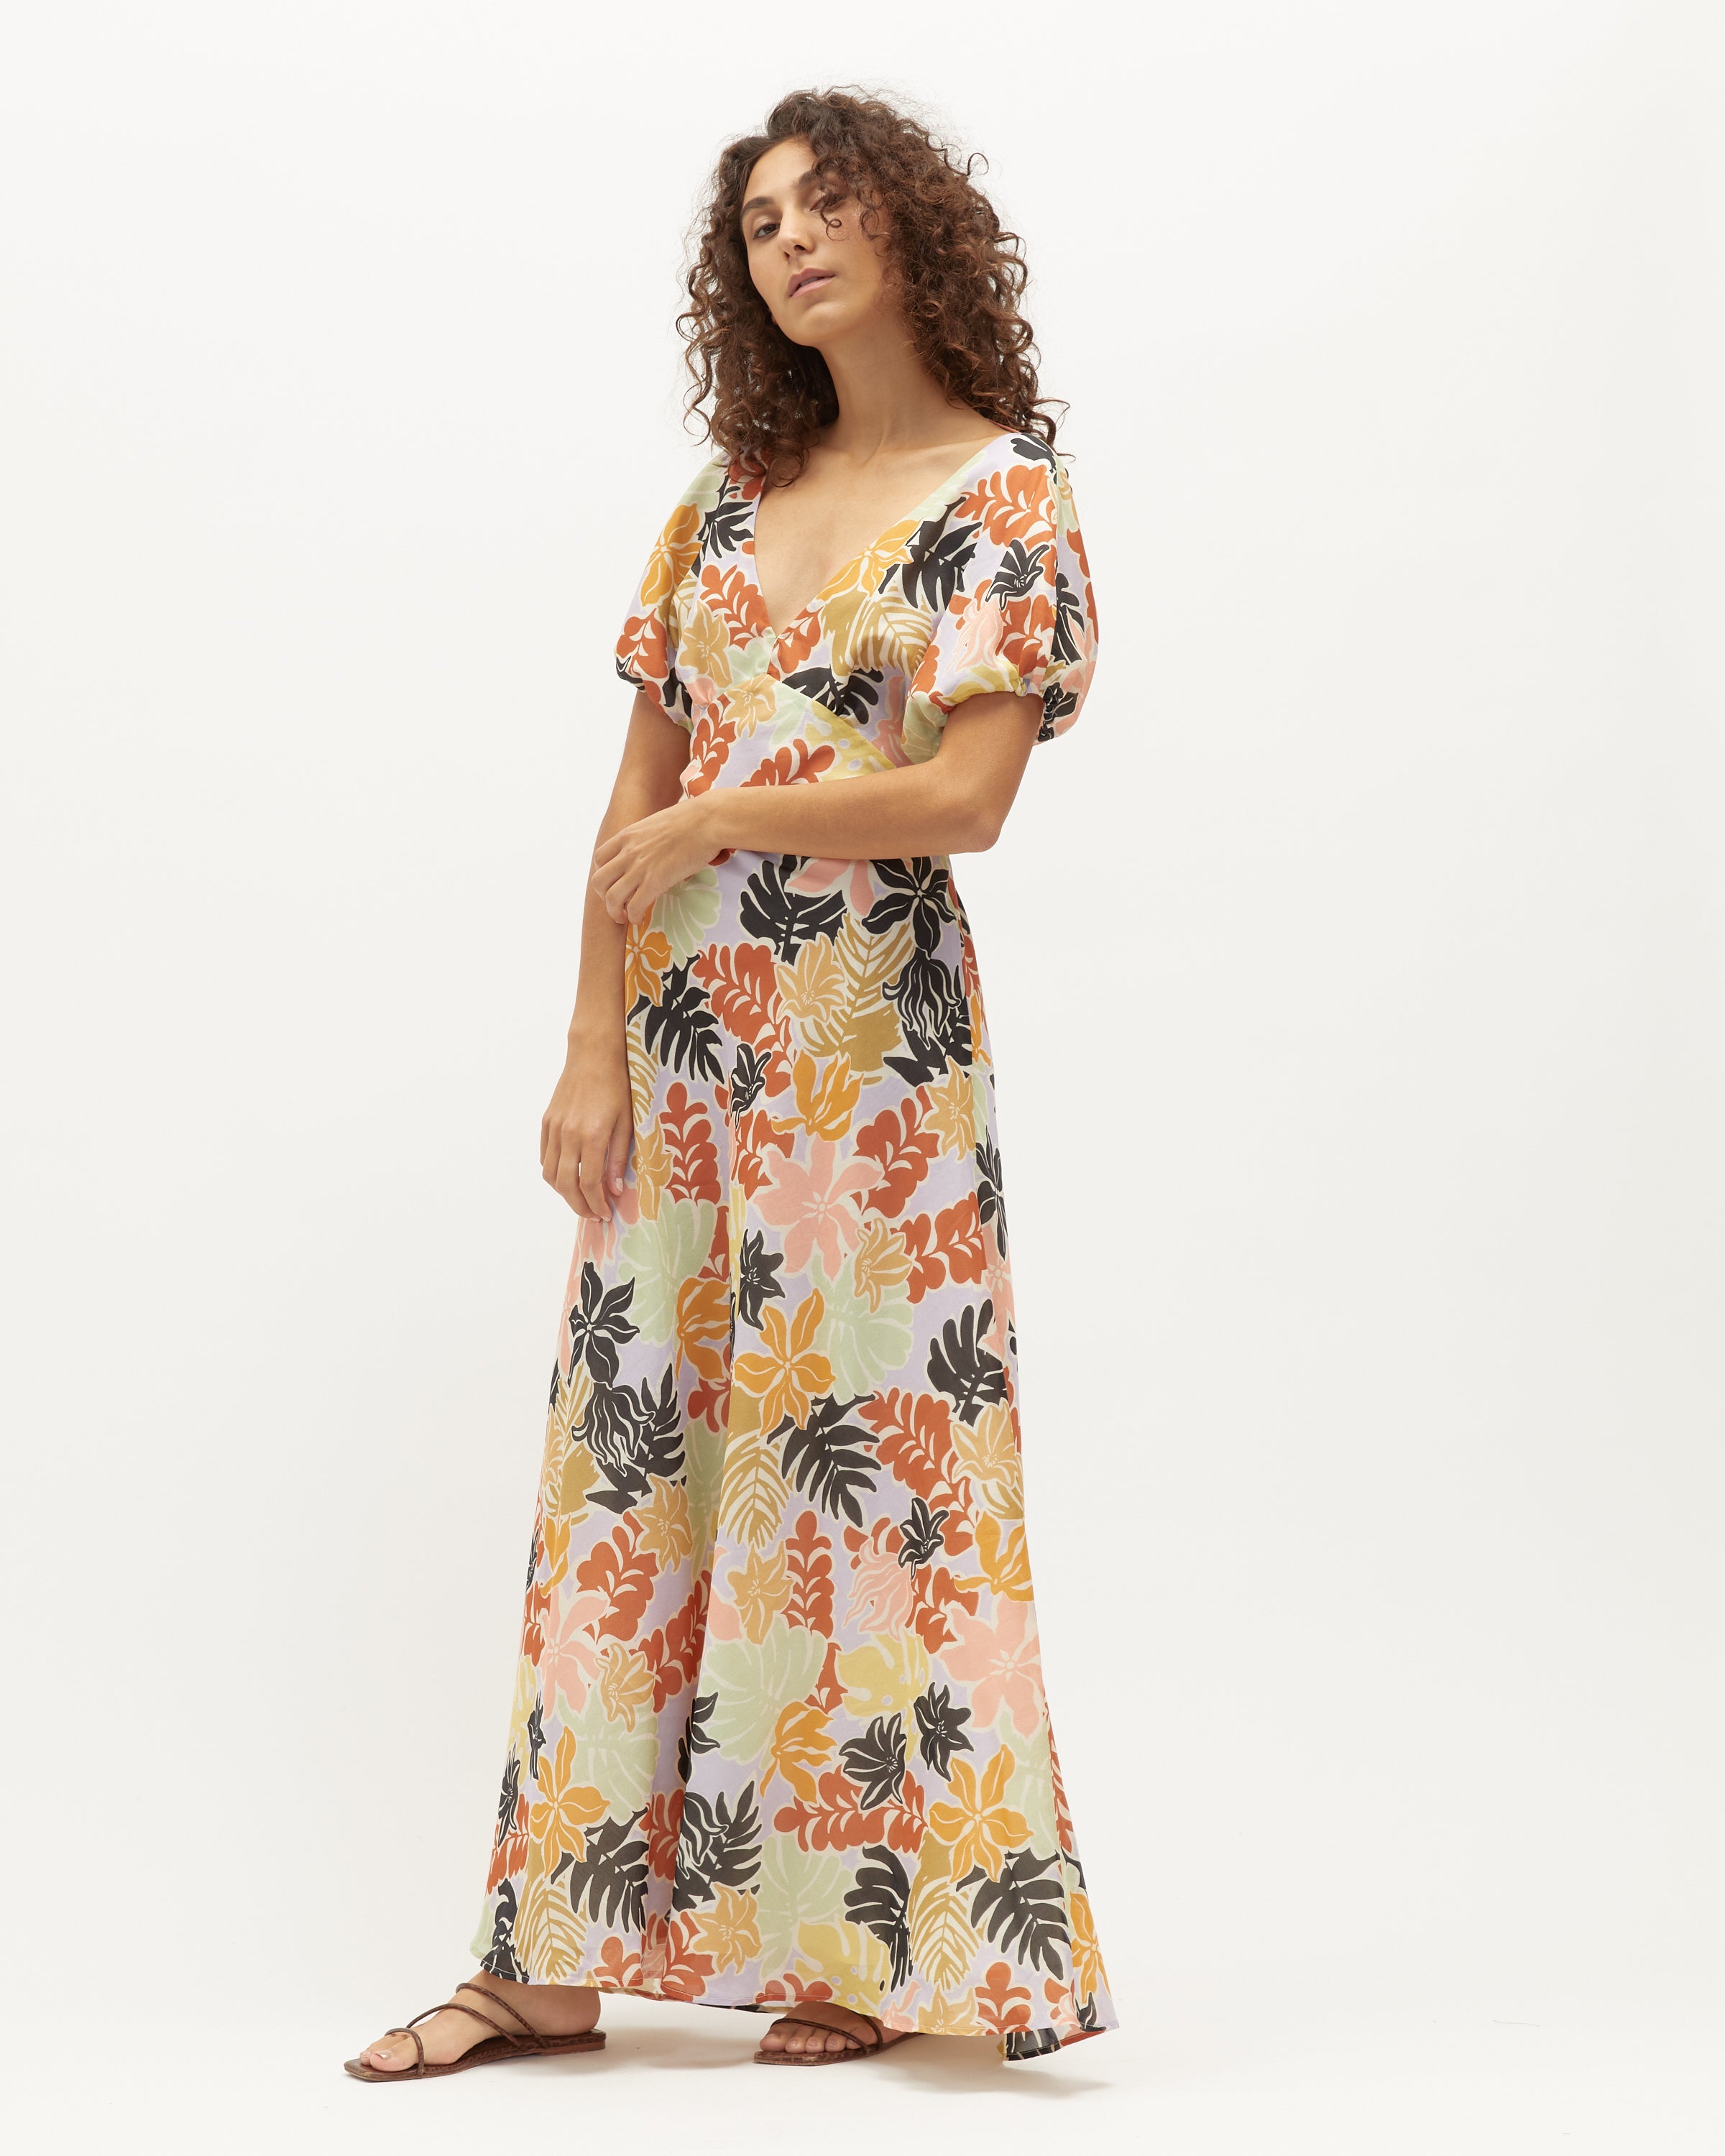 Adaline Dress | Louise Floral $590